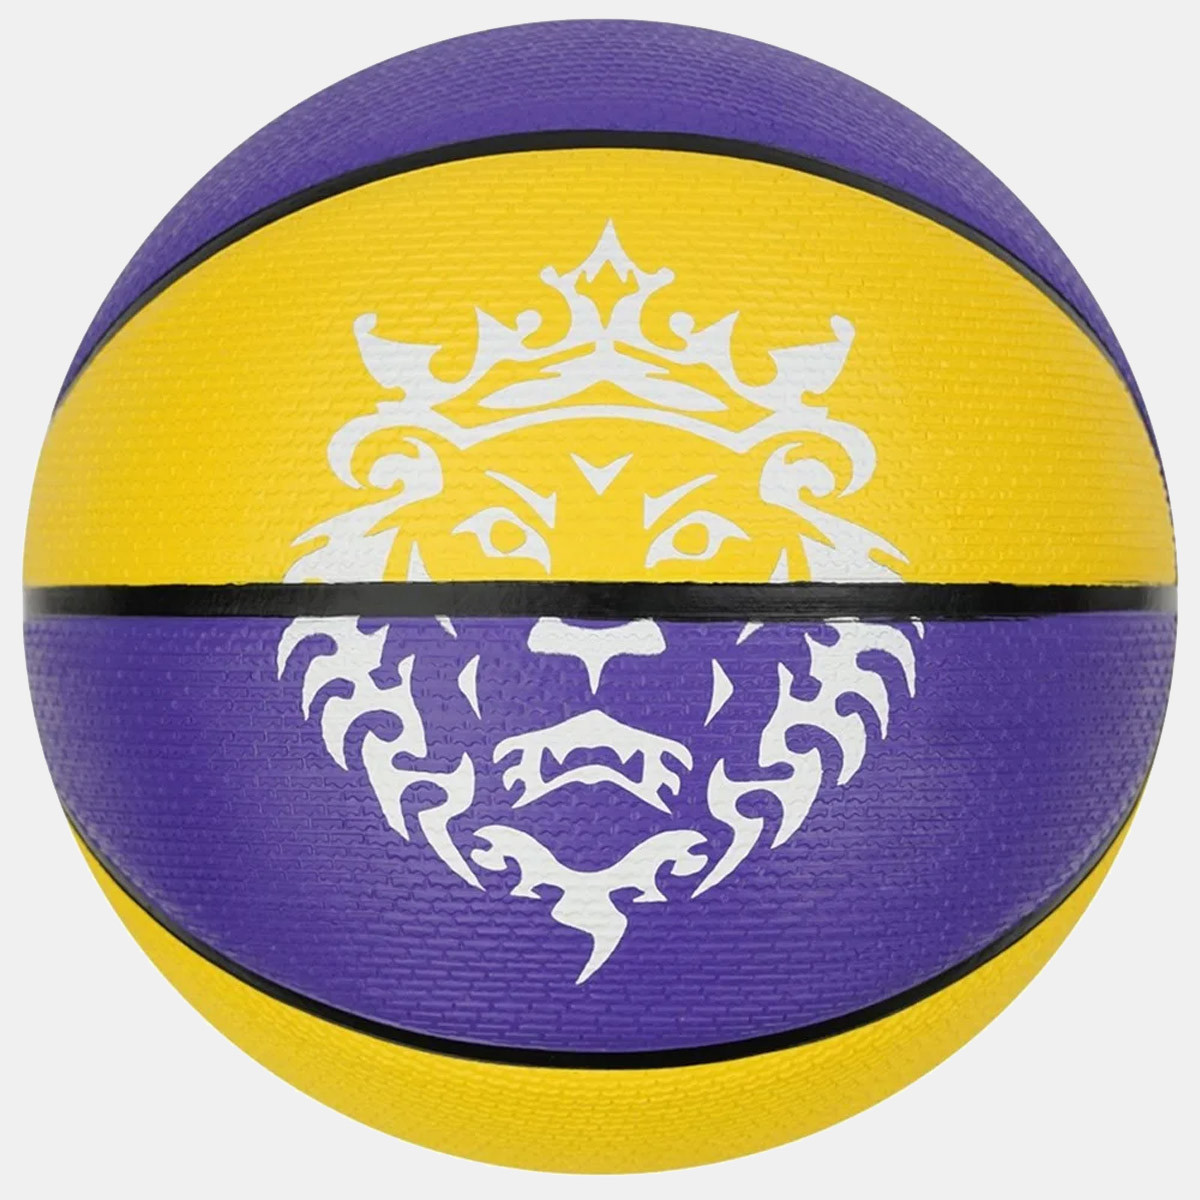 Nike Playground 2.0 8p LeBron James Basketball - Yellow/Purple - N1004372-575